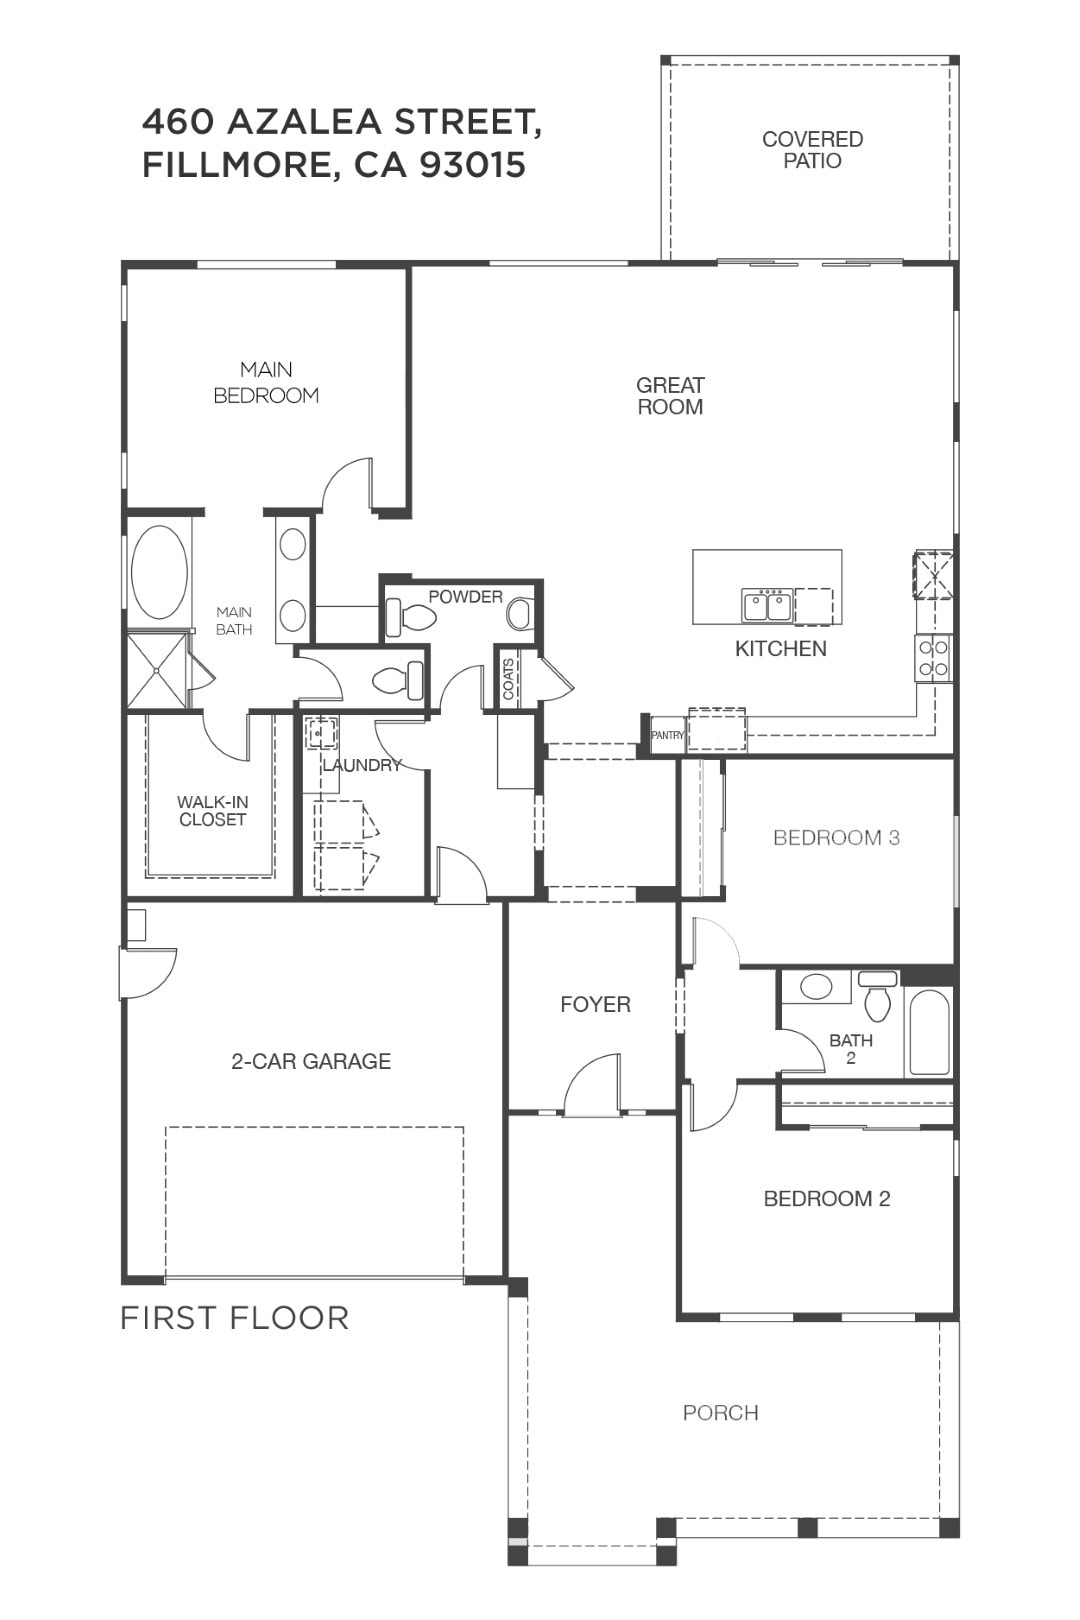 460 Azalea Street, Fillmore, CA 93015 - Floor Plan (Large)